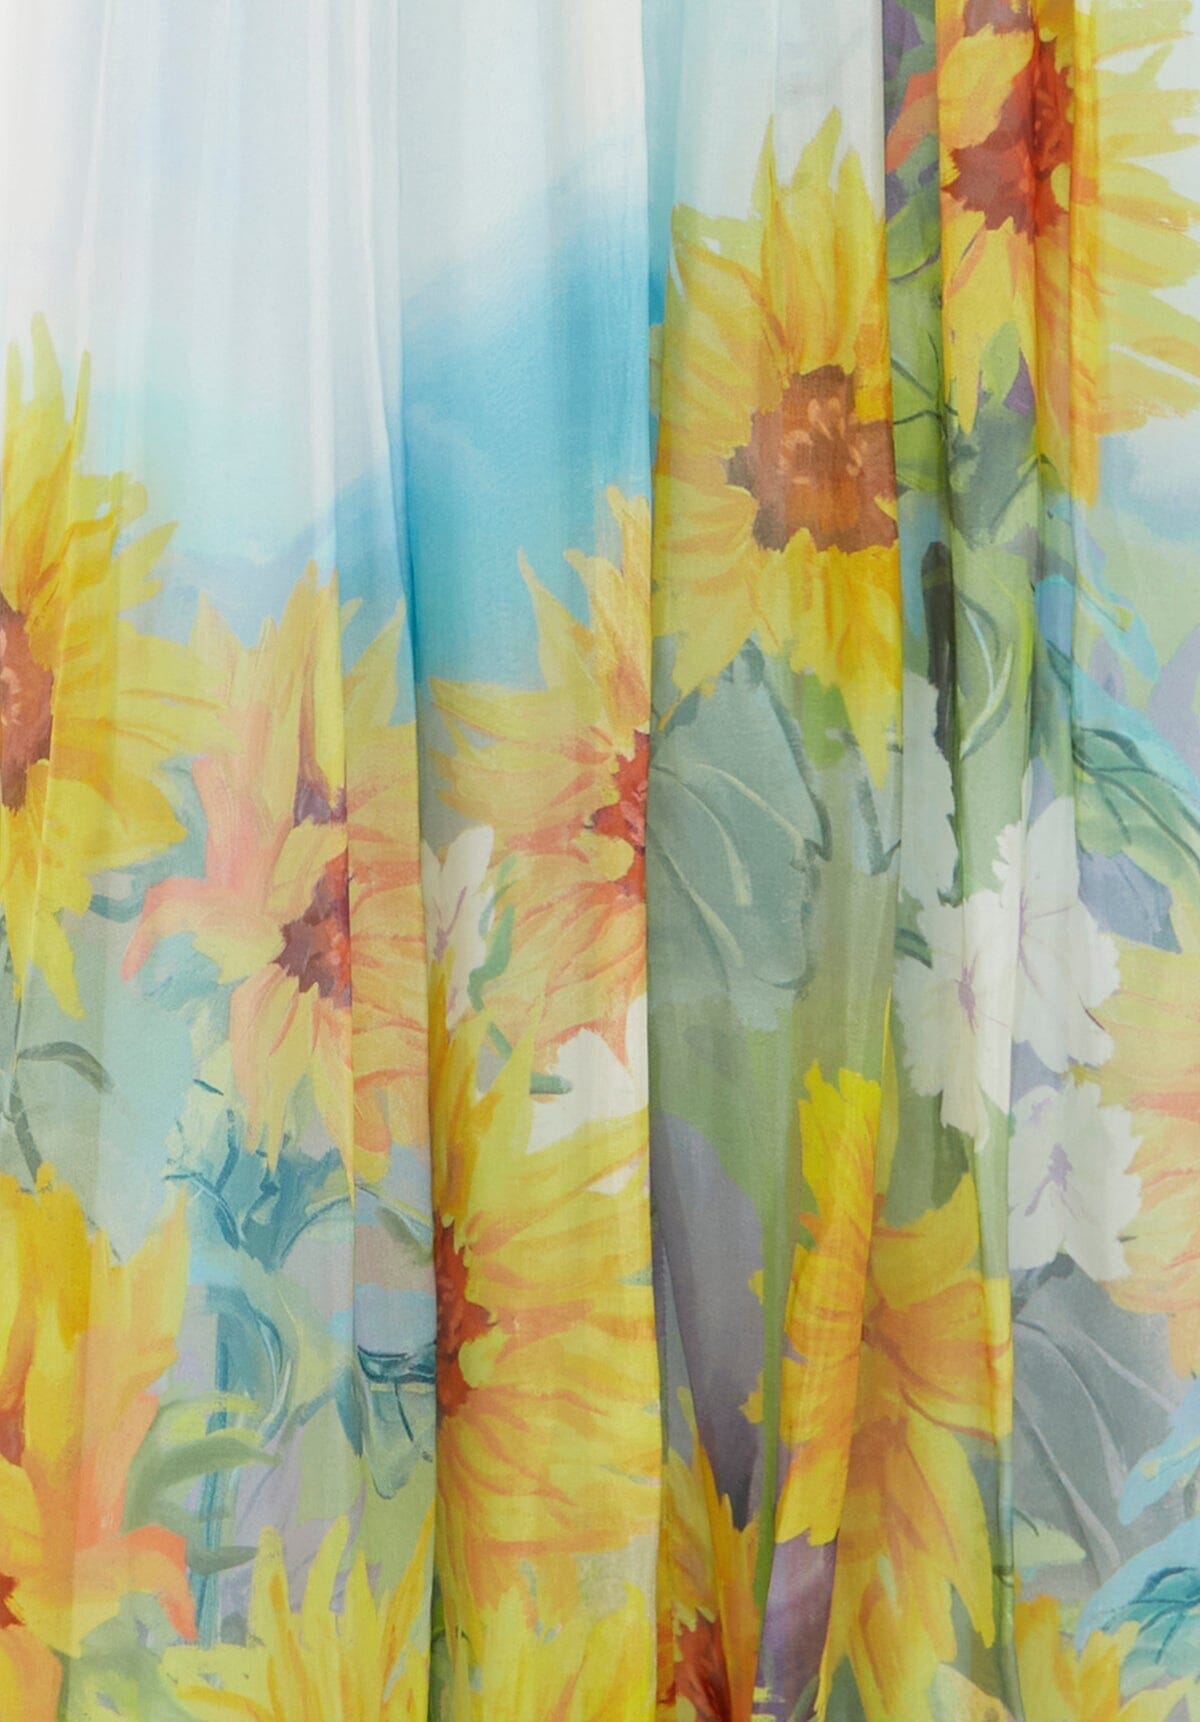 Claudette Silk Halterneck Maxi Dress - Sunflower Print in Landscape Clothing Leo Lin 